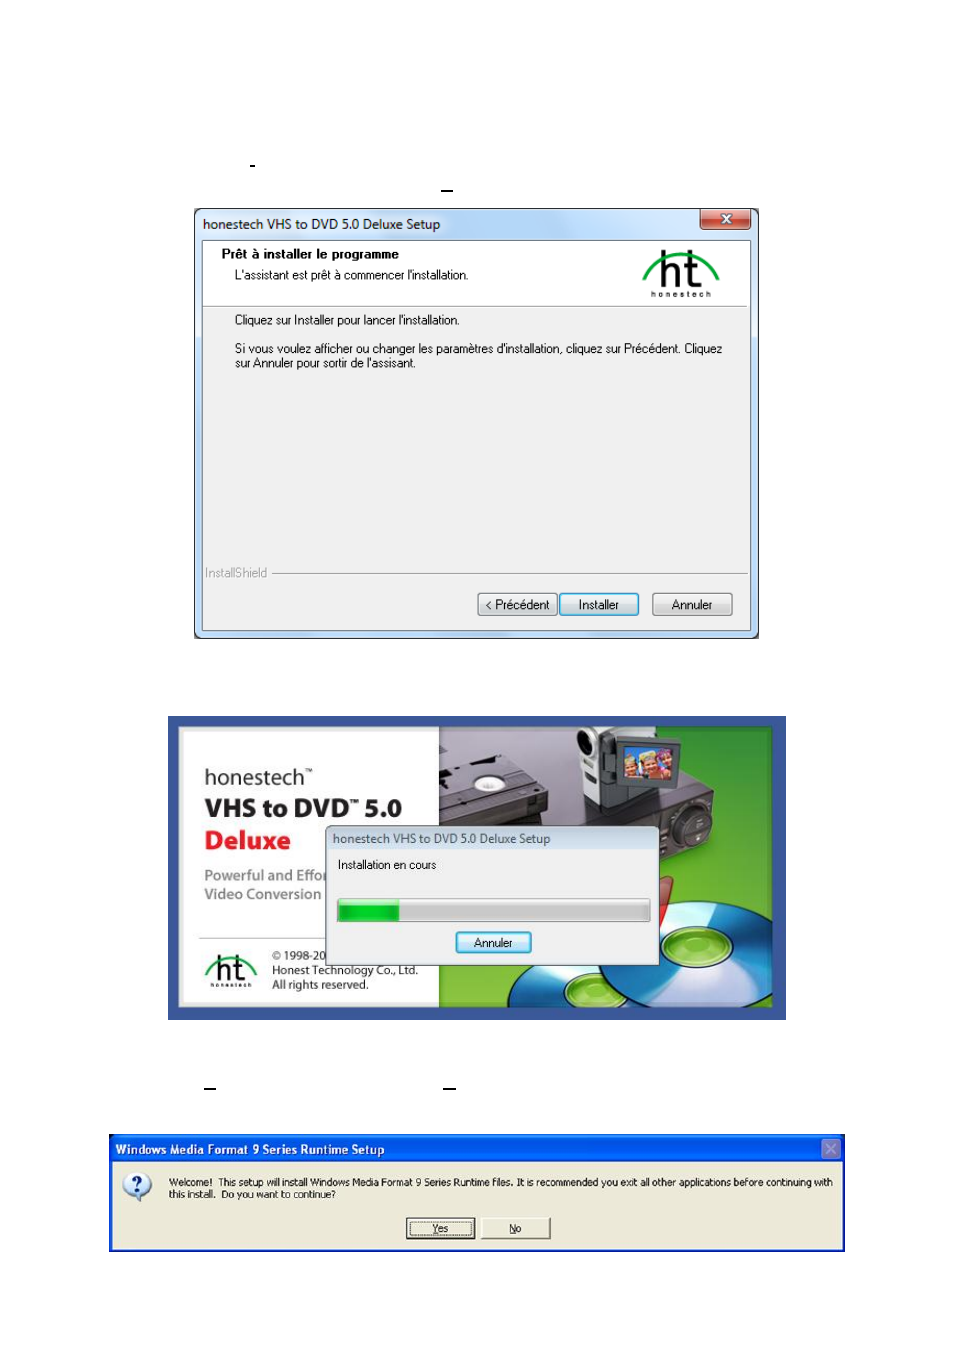 honestech vhs to dvd 5.0 deluxe windows 10 driver